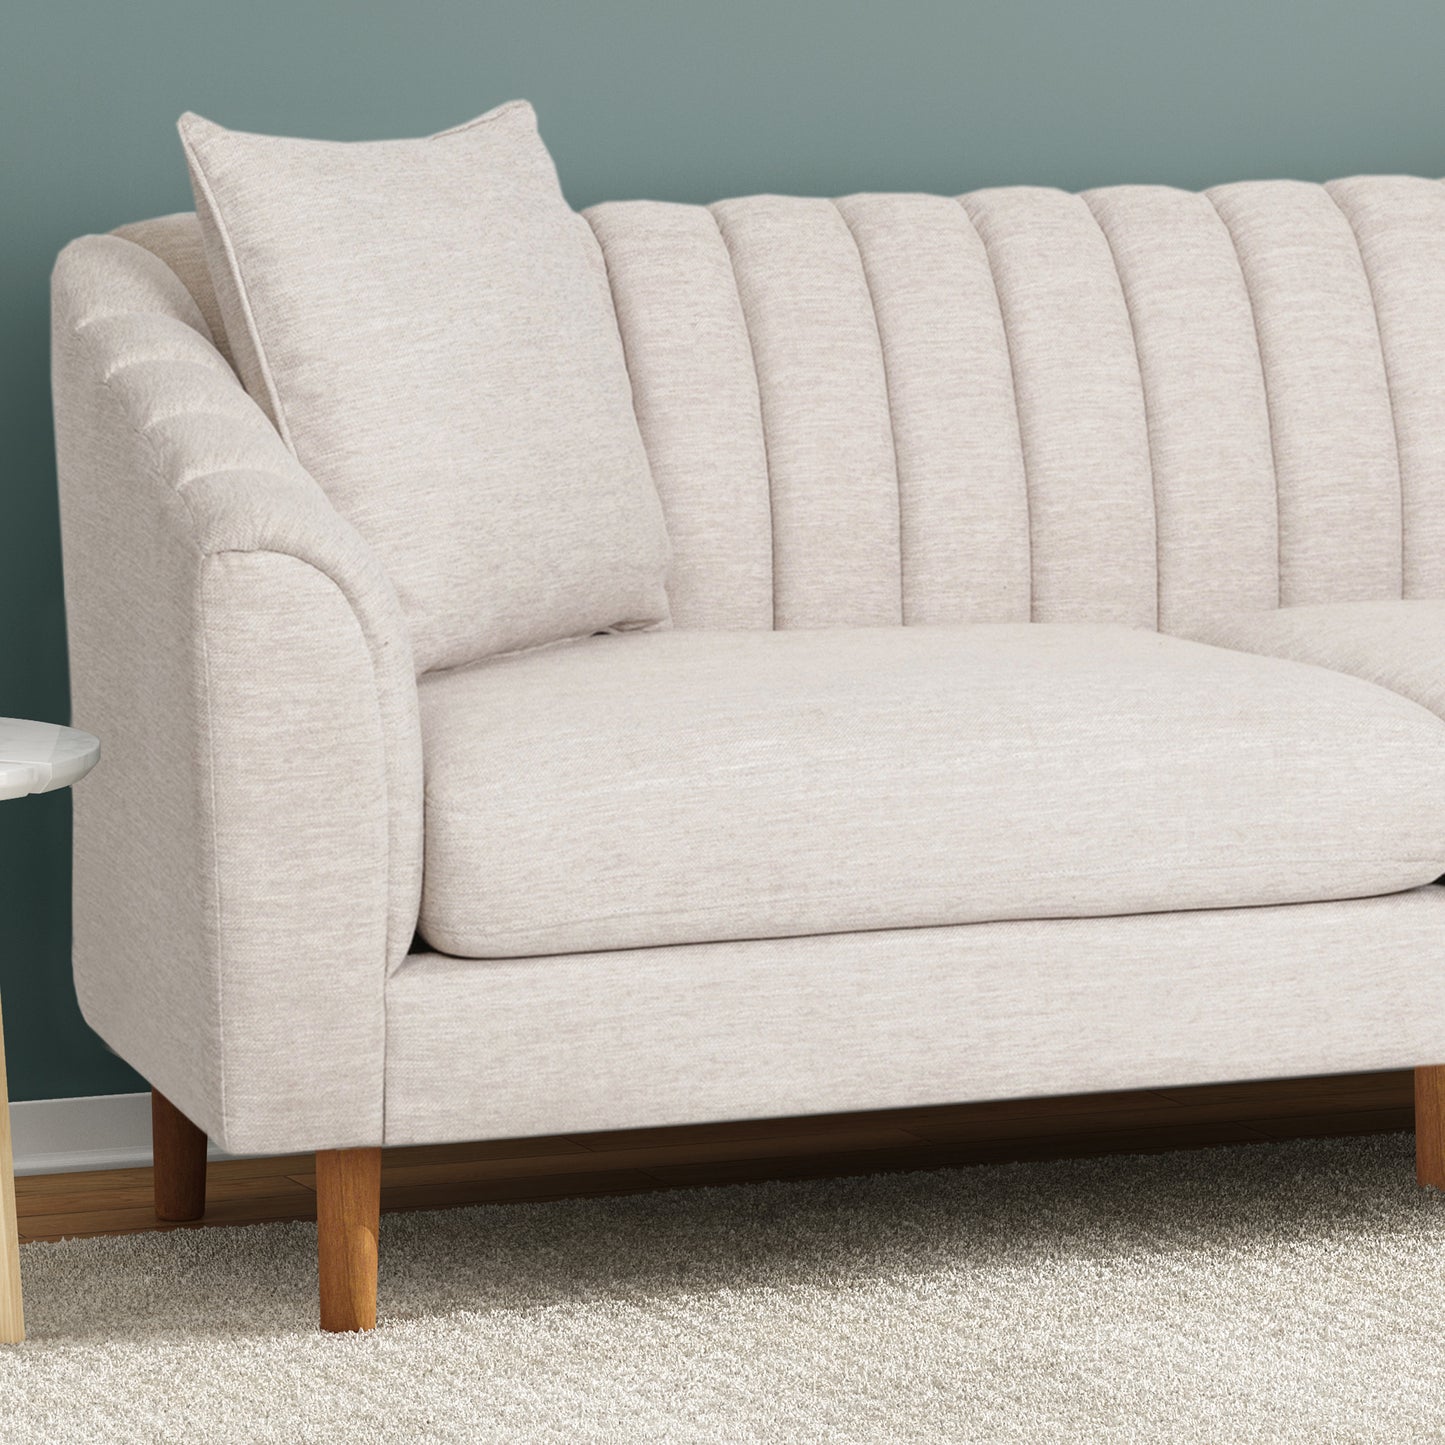 Jeannie Contemporary Fabric 3 Seater Sofa